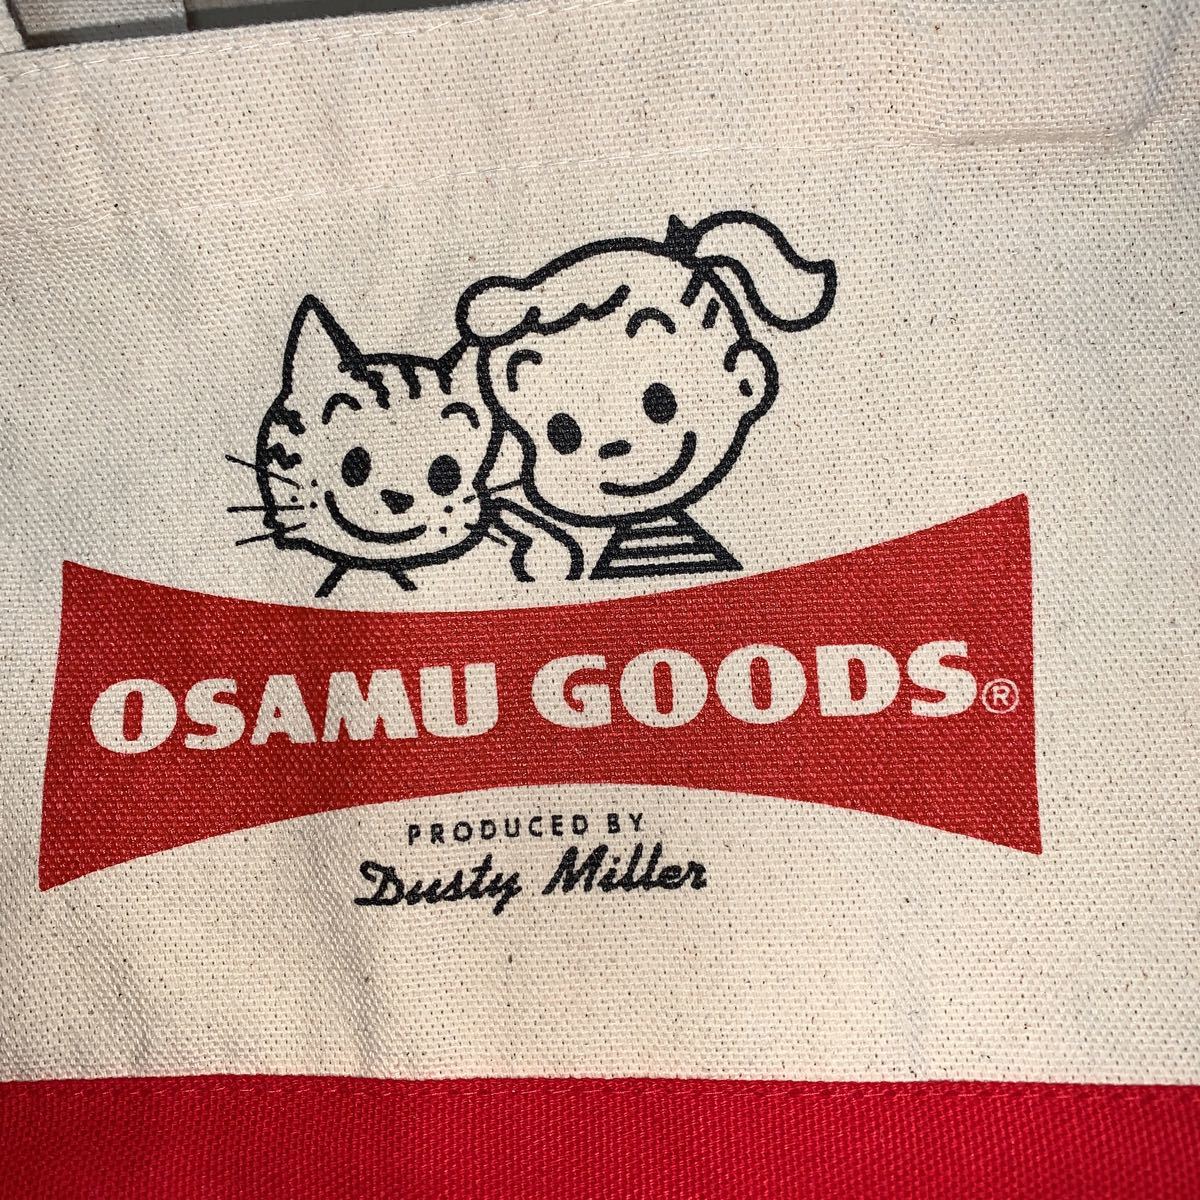  new goods o Sam goods tote bag osamu goods is ladao Sam is .....